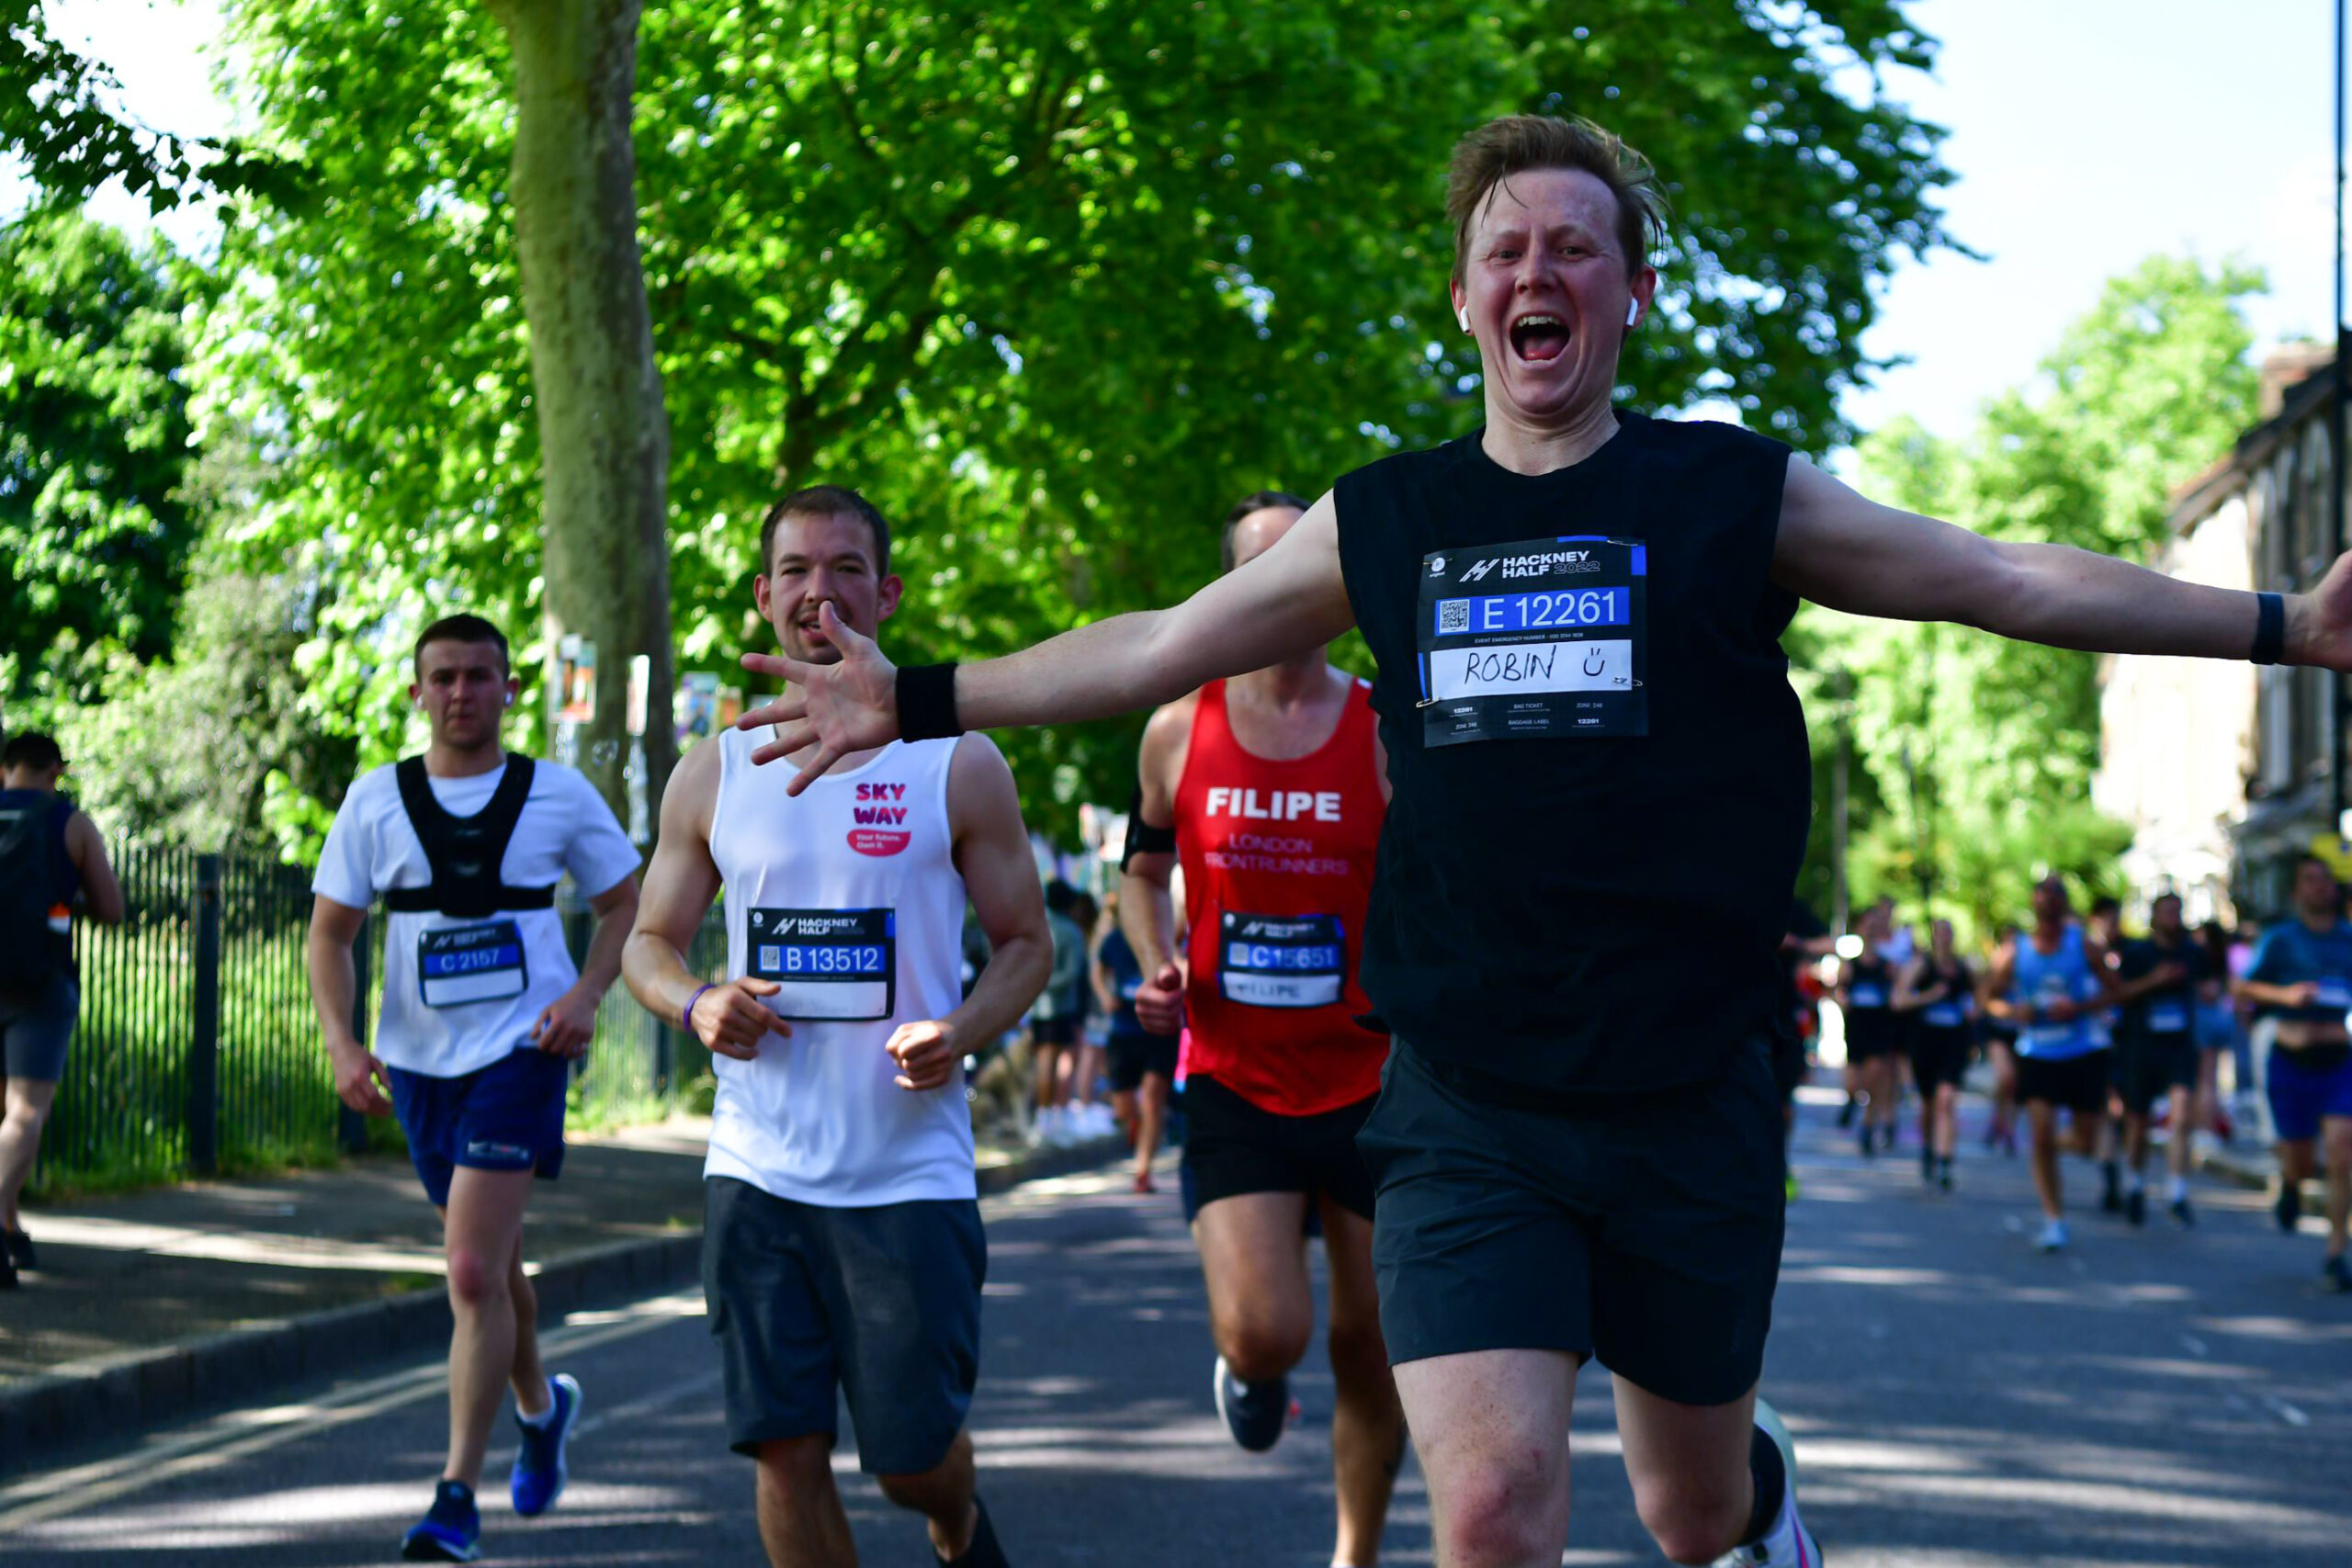 Runners celebrating in the Hackney Half Marathon 2022